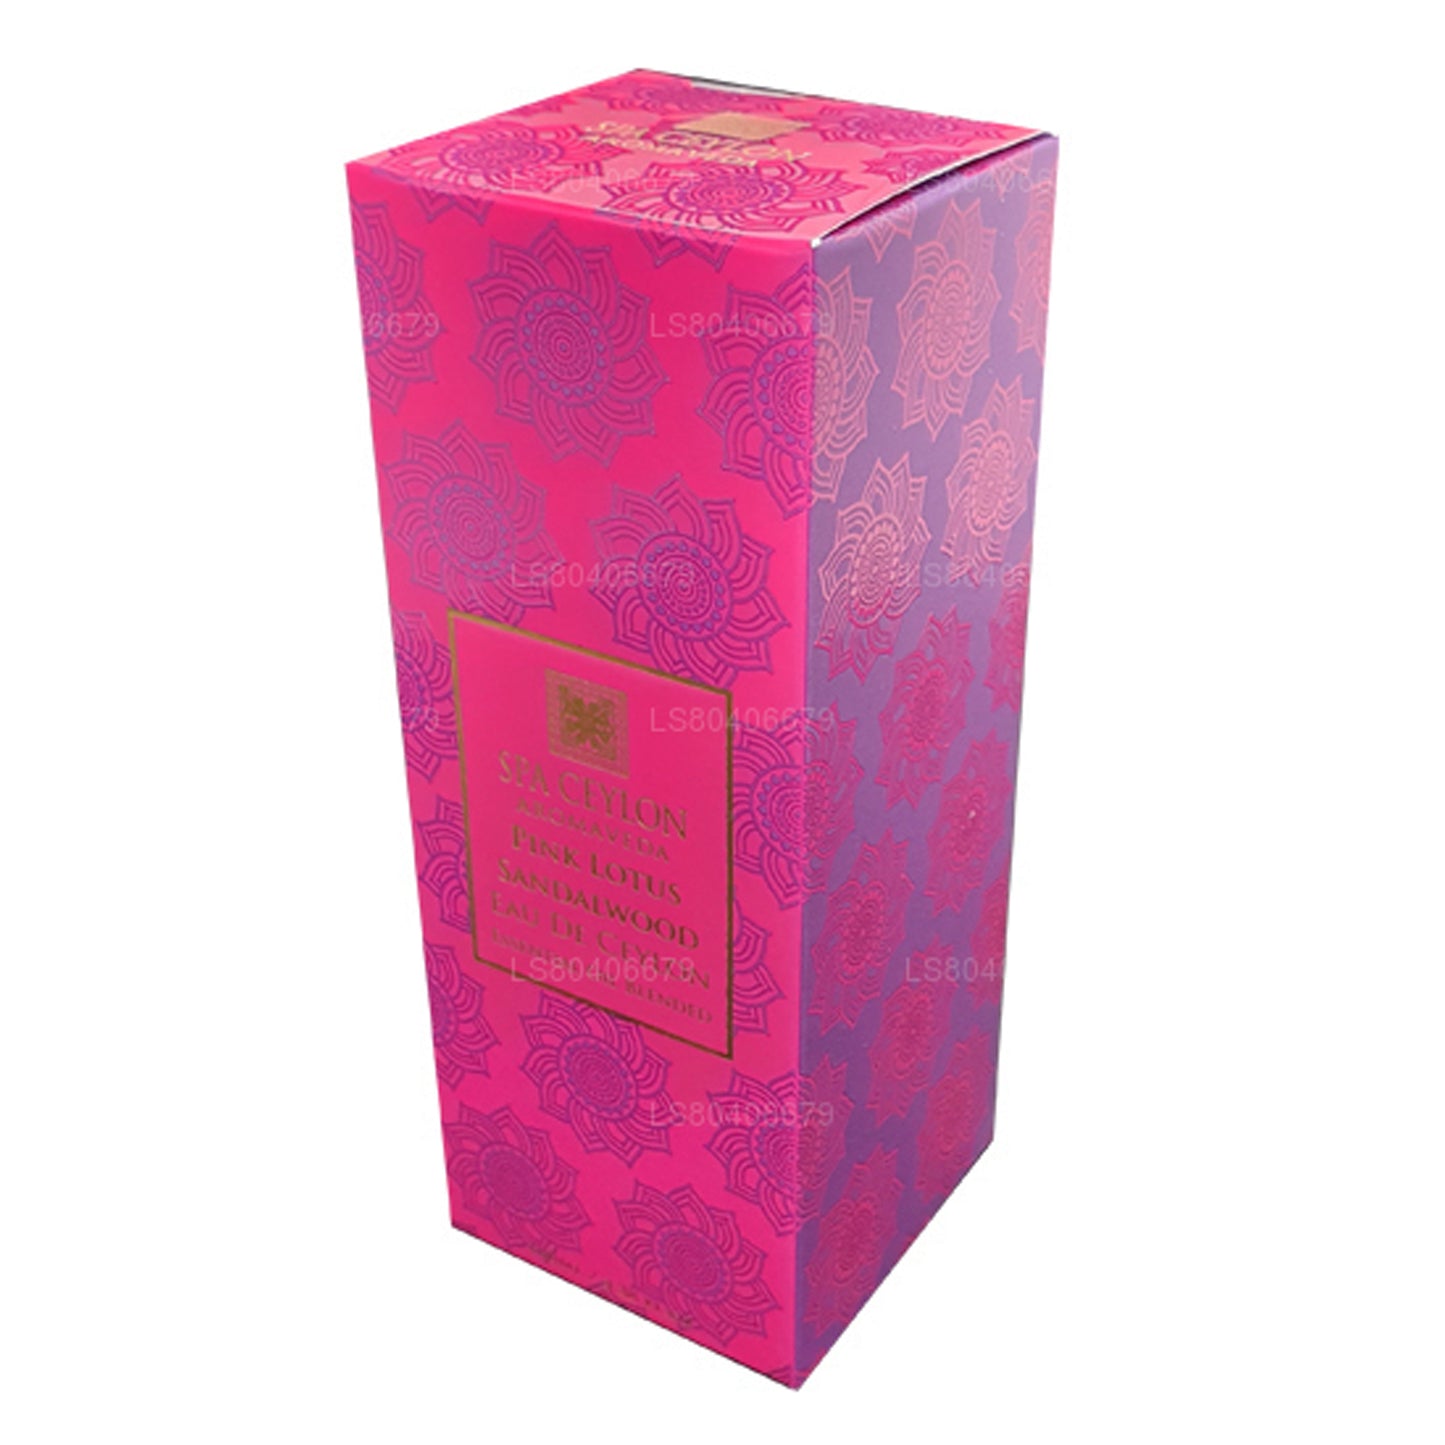 Spa Ceylon Pink Lotus Sandalwood Eau de Ceylan (100 ml)